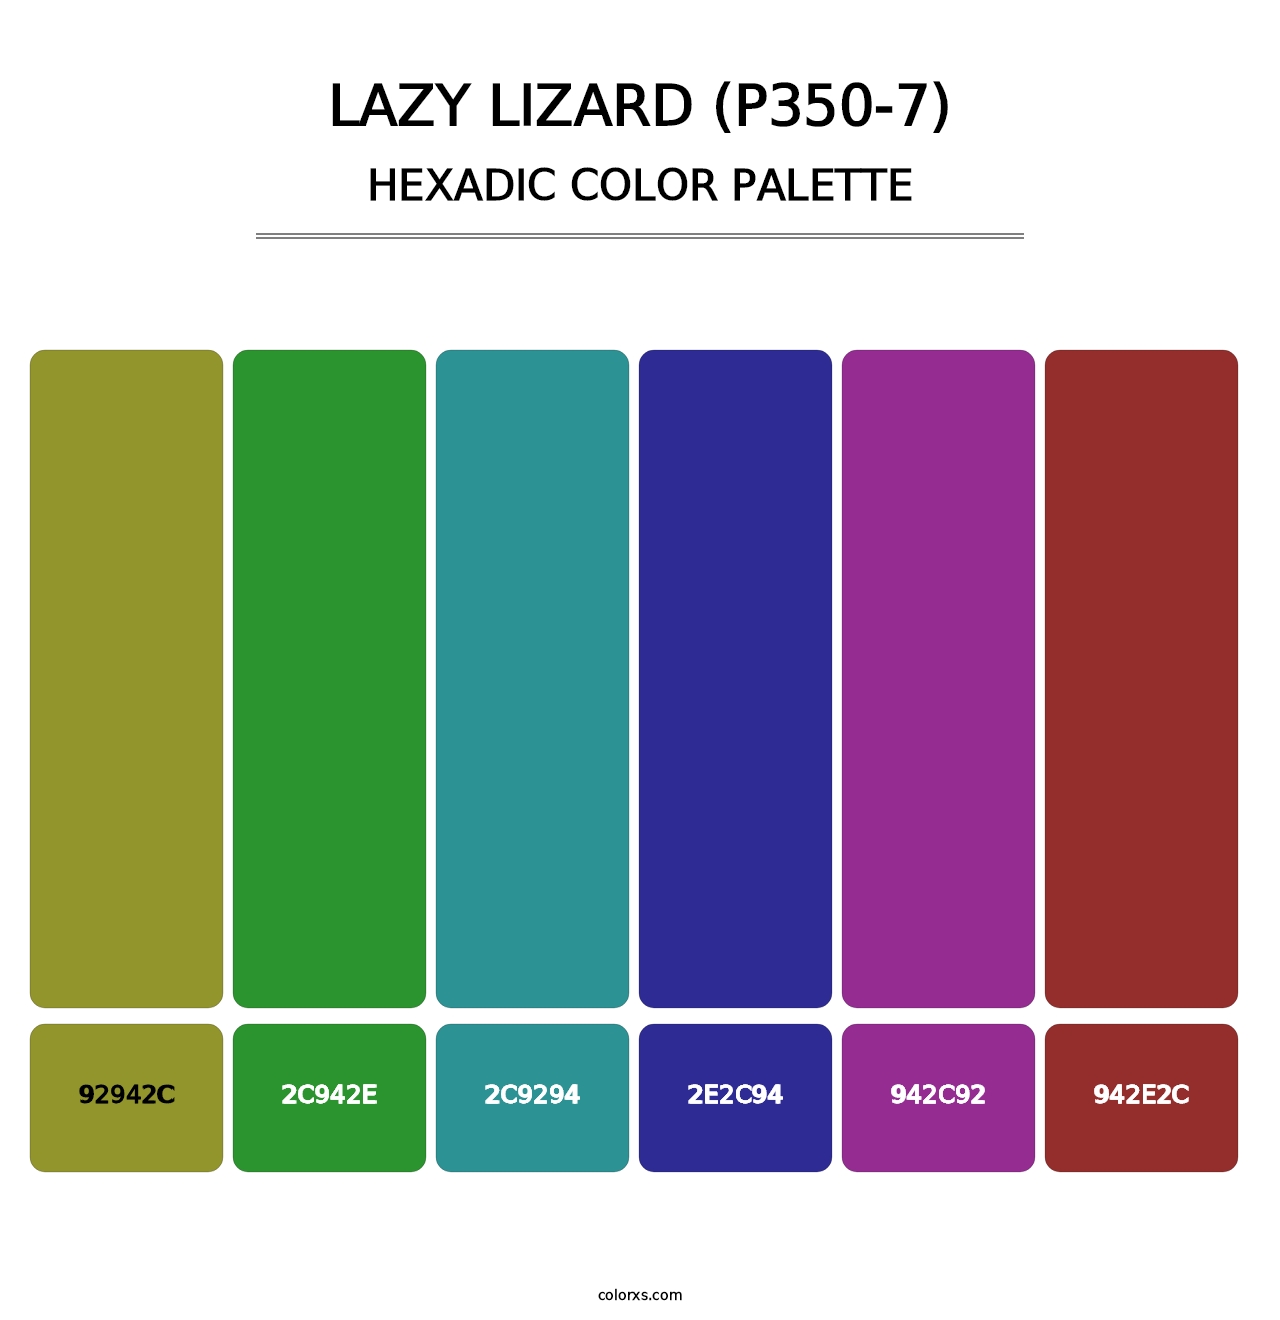 Lazy Lizard (P350-7) - Hexadic Color Palette